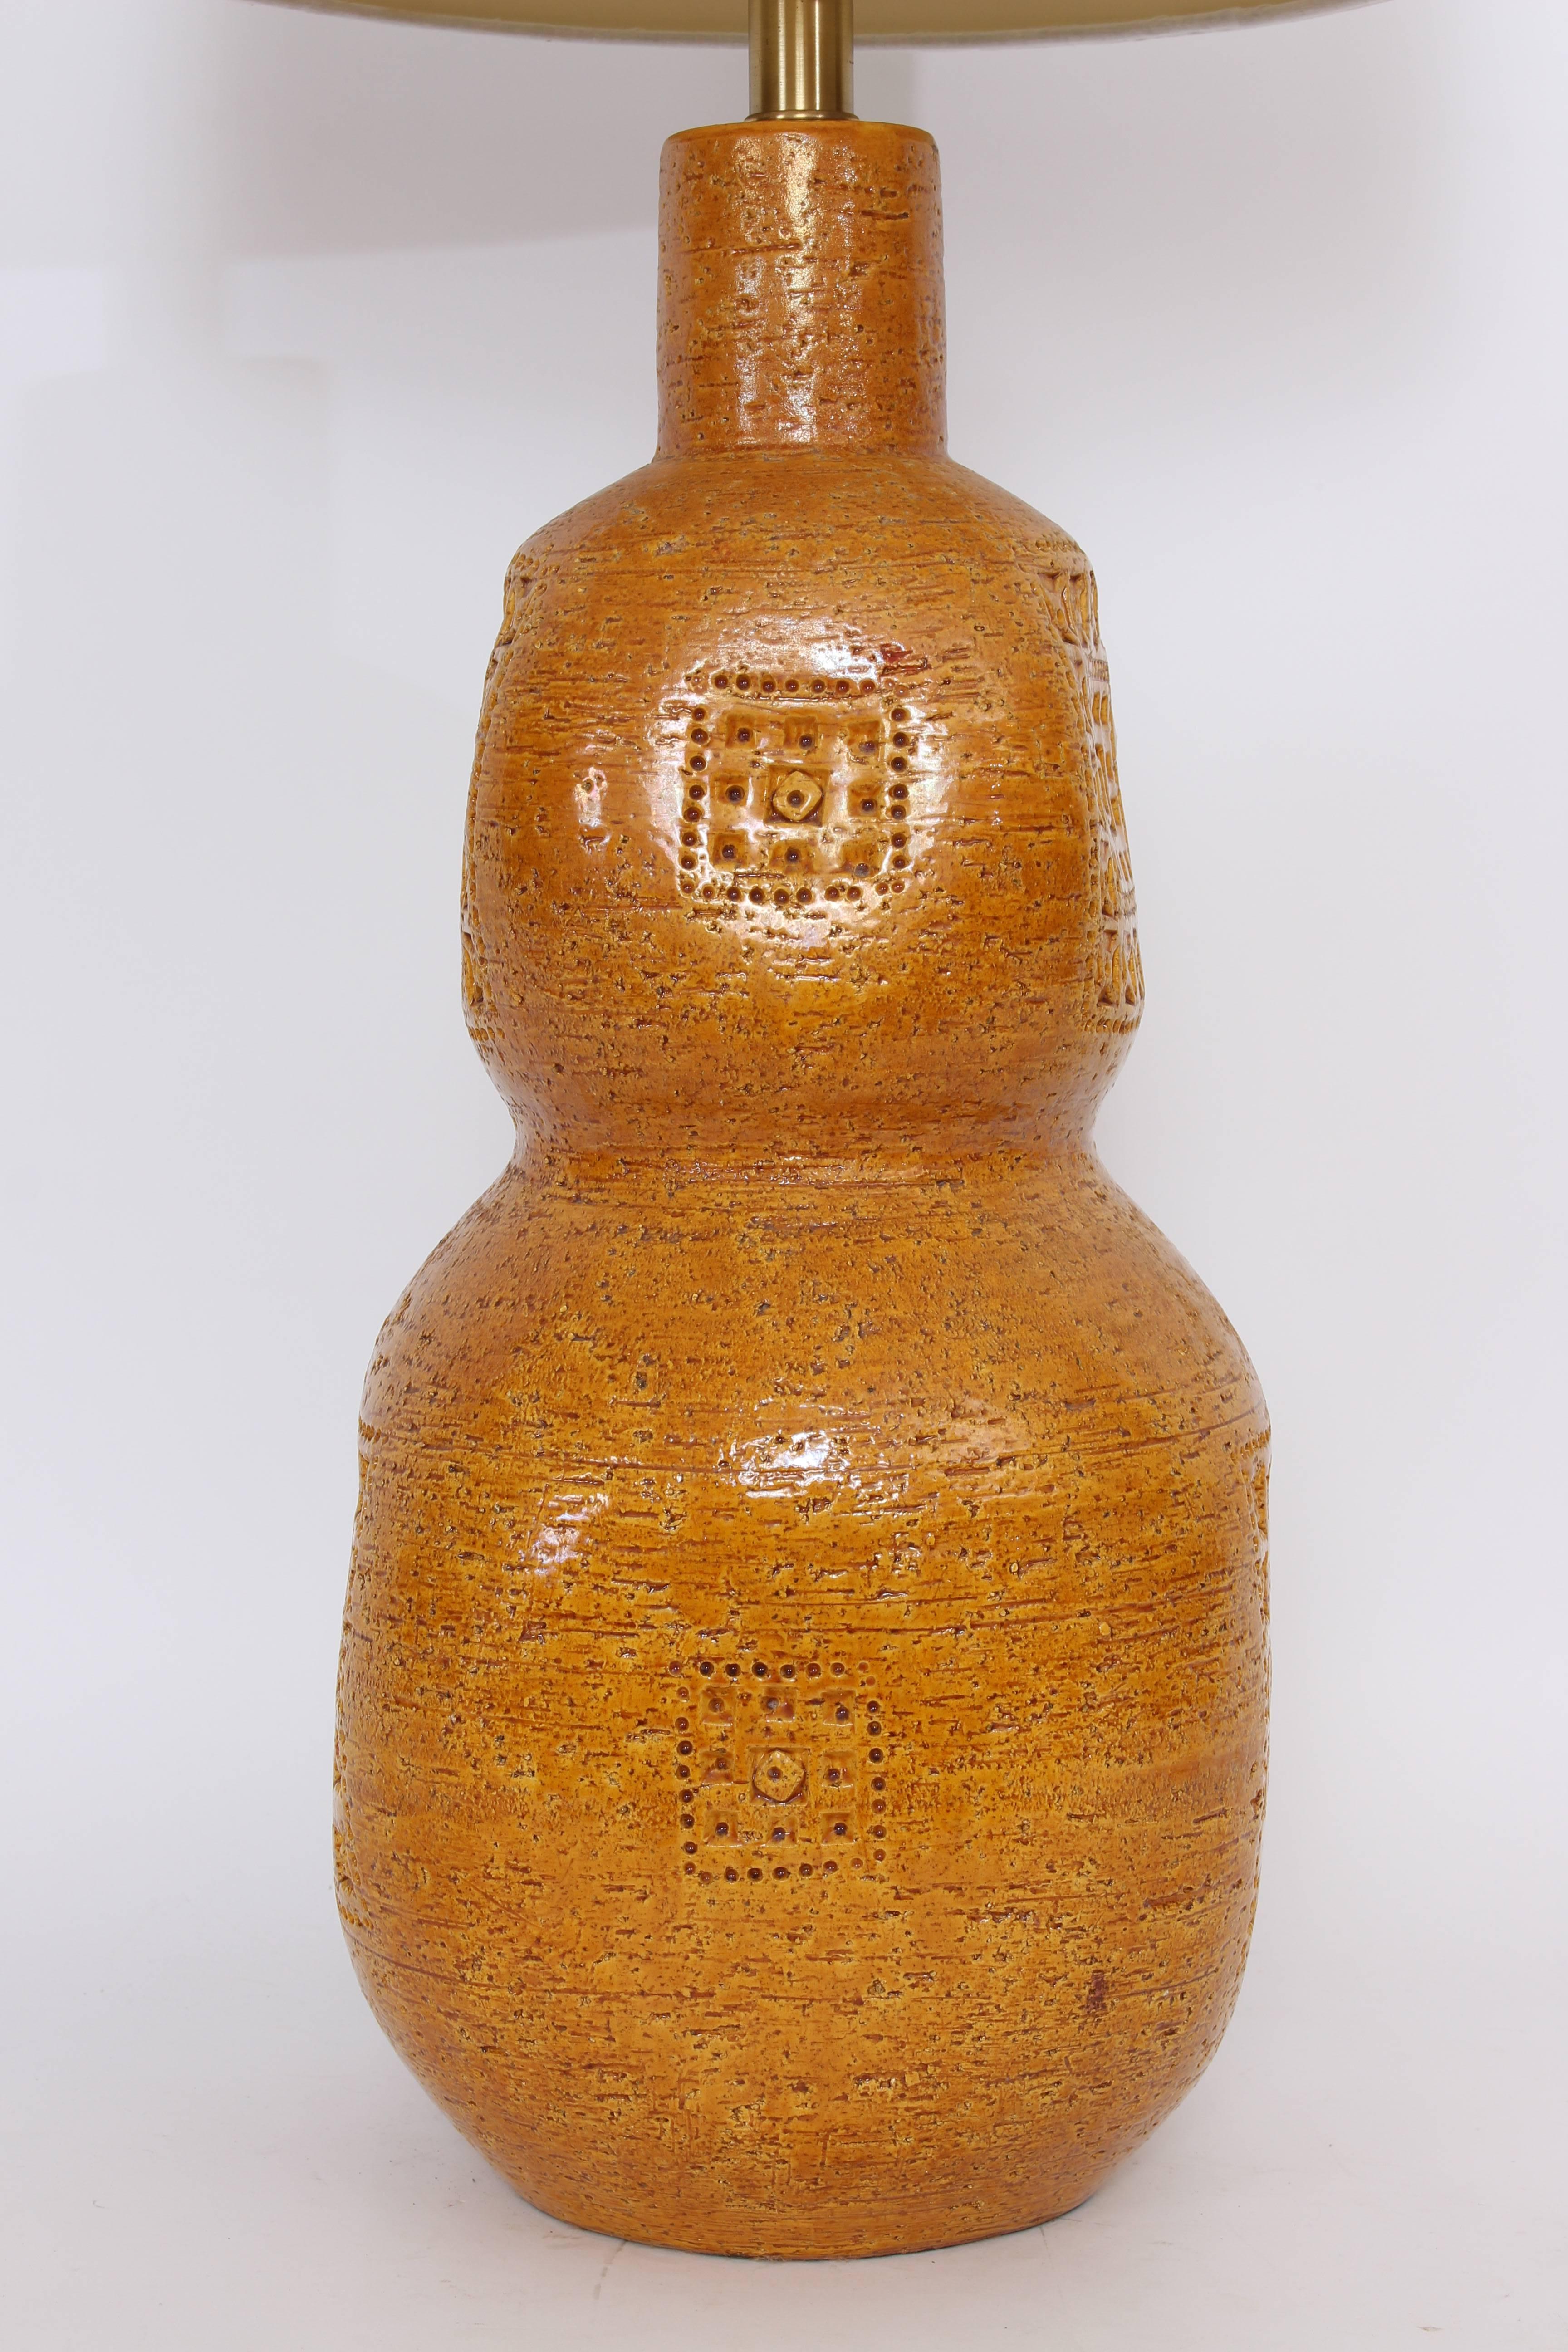 Monumental Aldo Londi for Bitossi Incised Bright Ochre Ceramic Table Lamp, 1950s For Sale 2